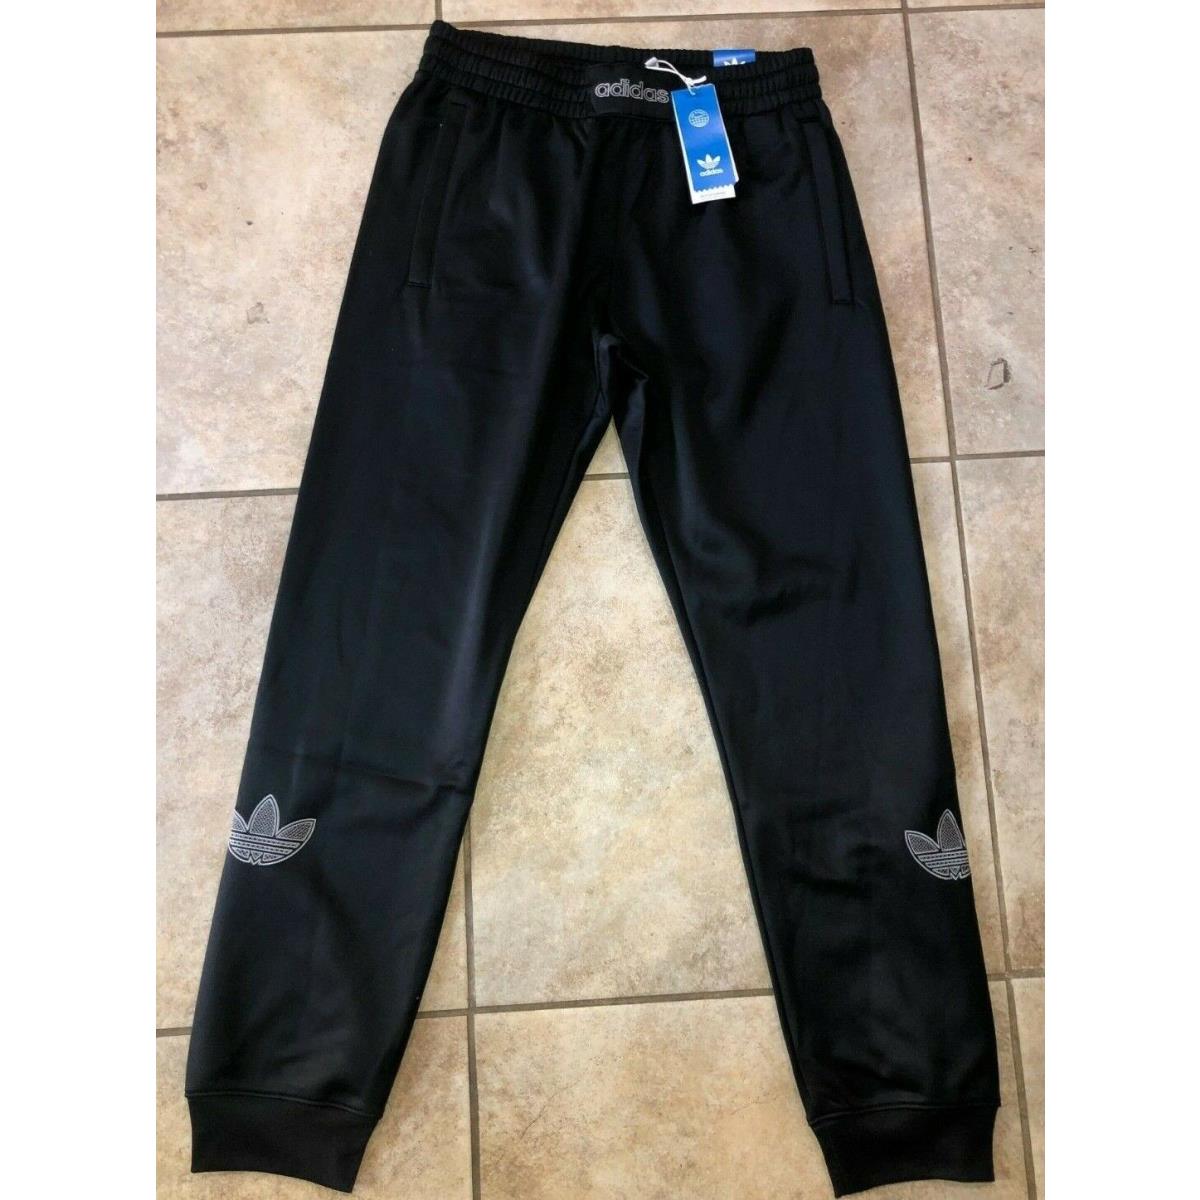 Adidas Originals Logo Cuffed Sweatpants Black H06738 Mens Sz M